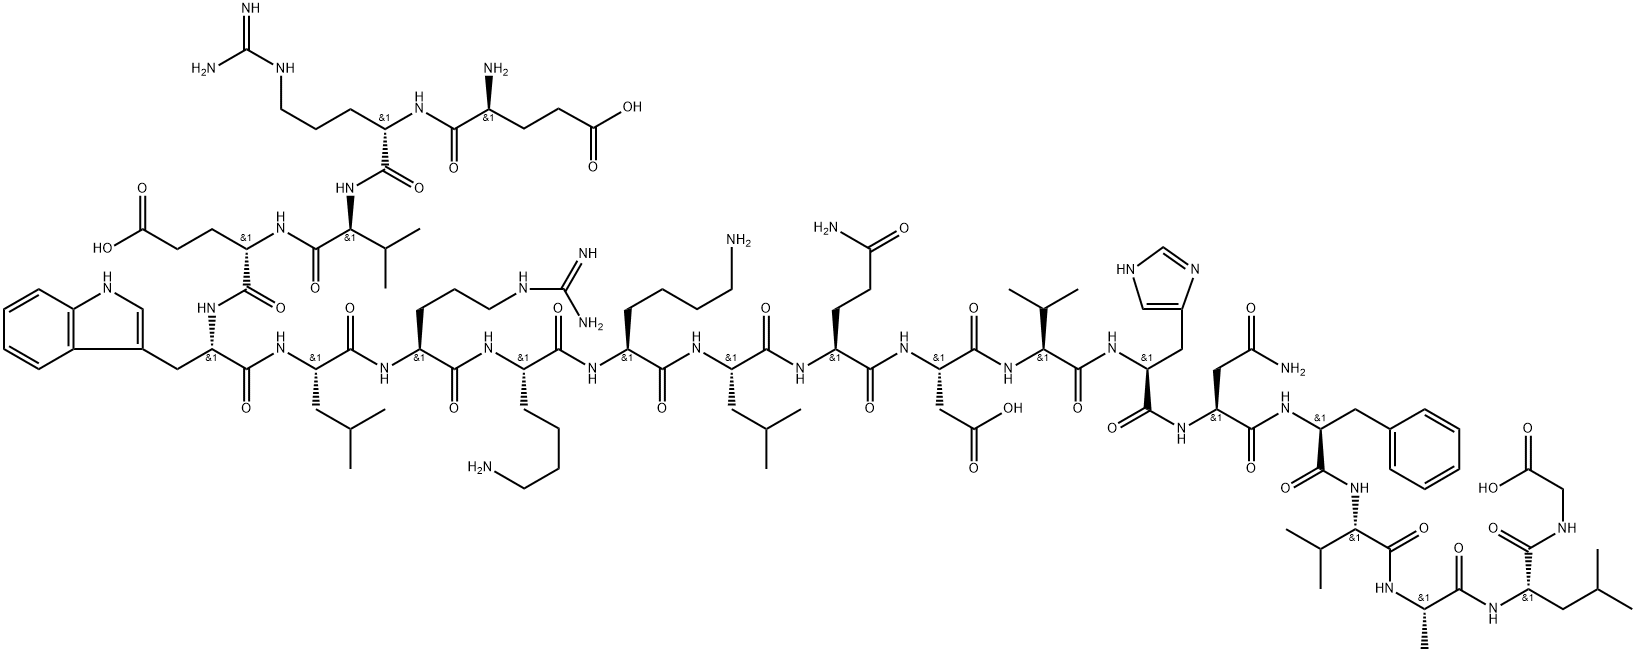 84057-87-4 parathyroid hormone (19-38)